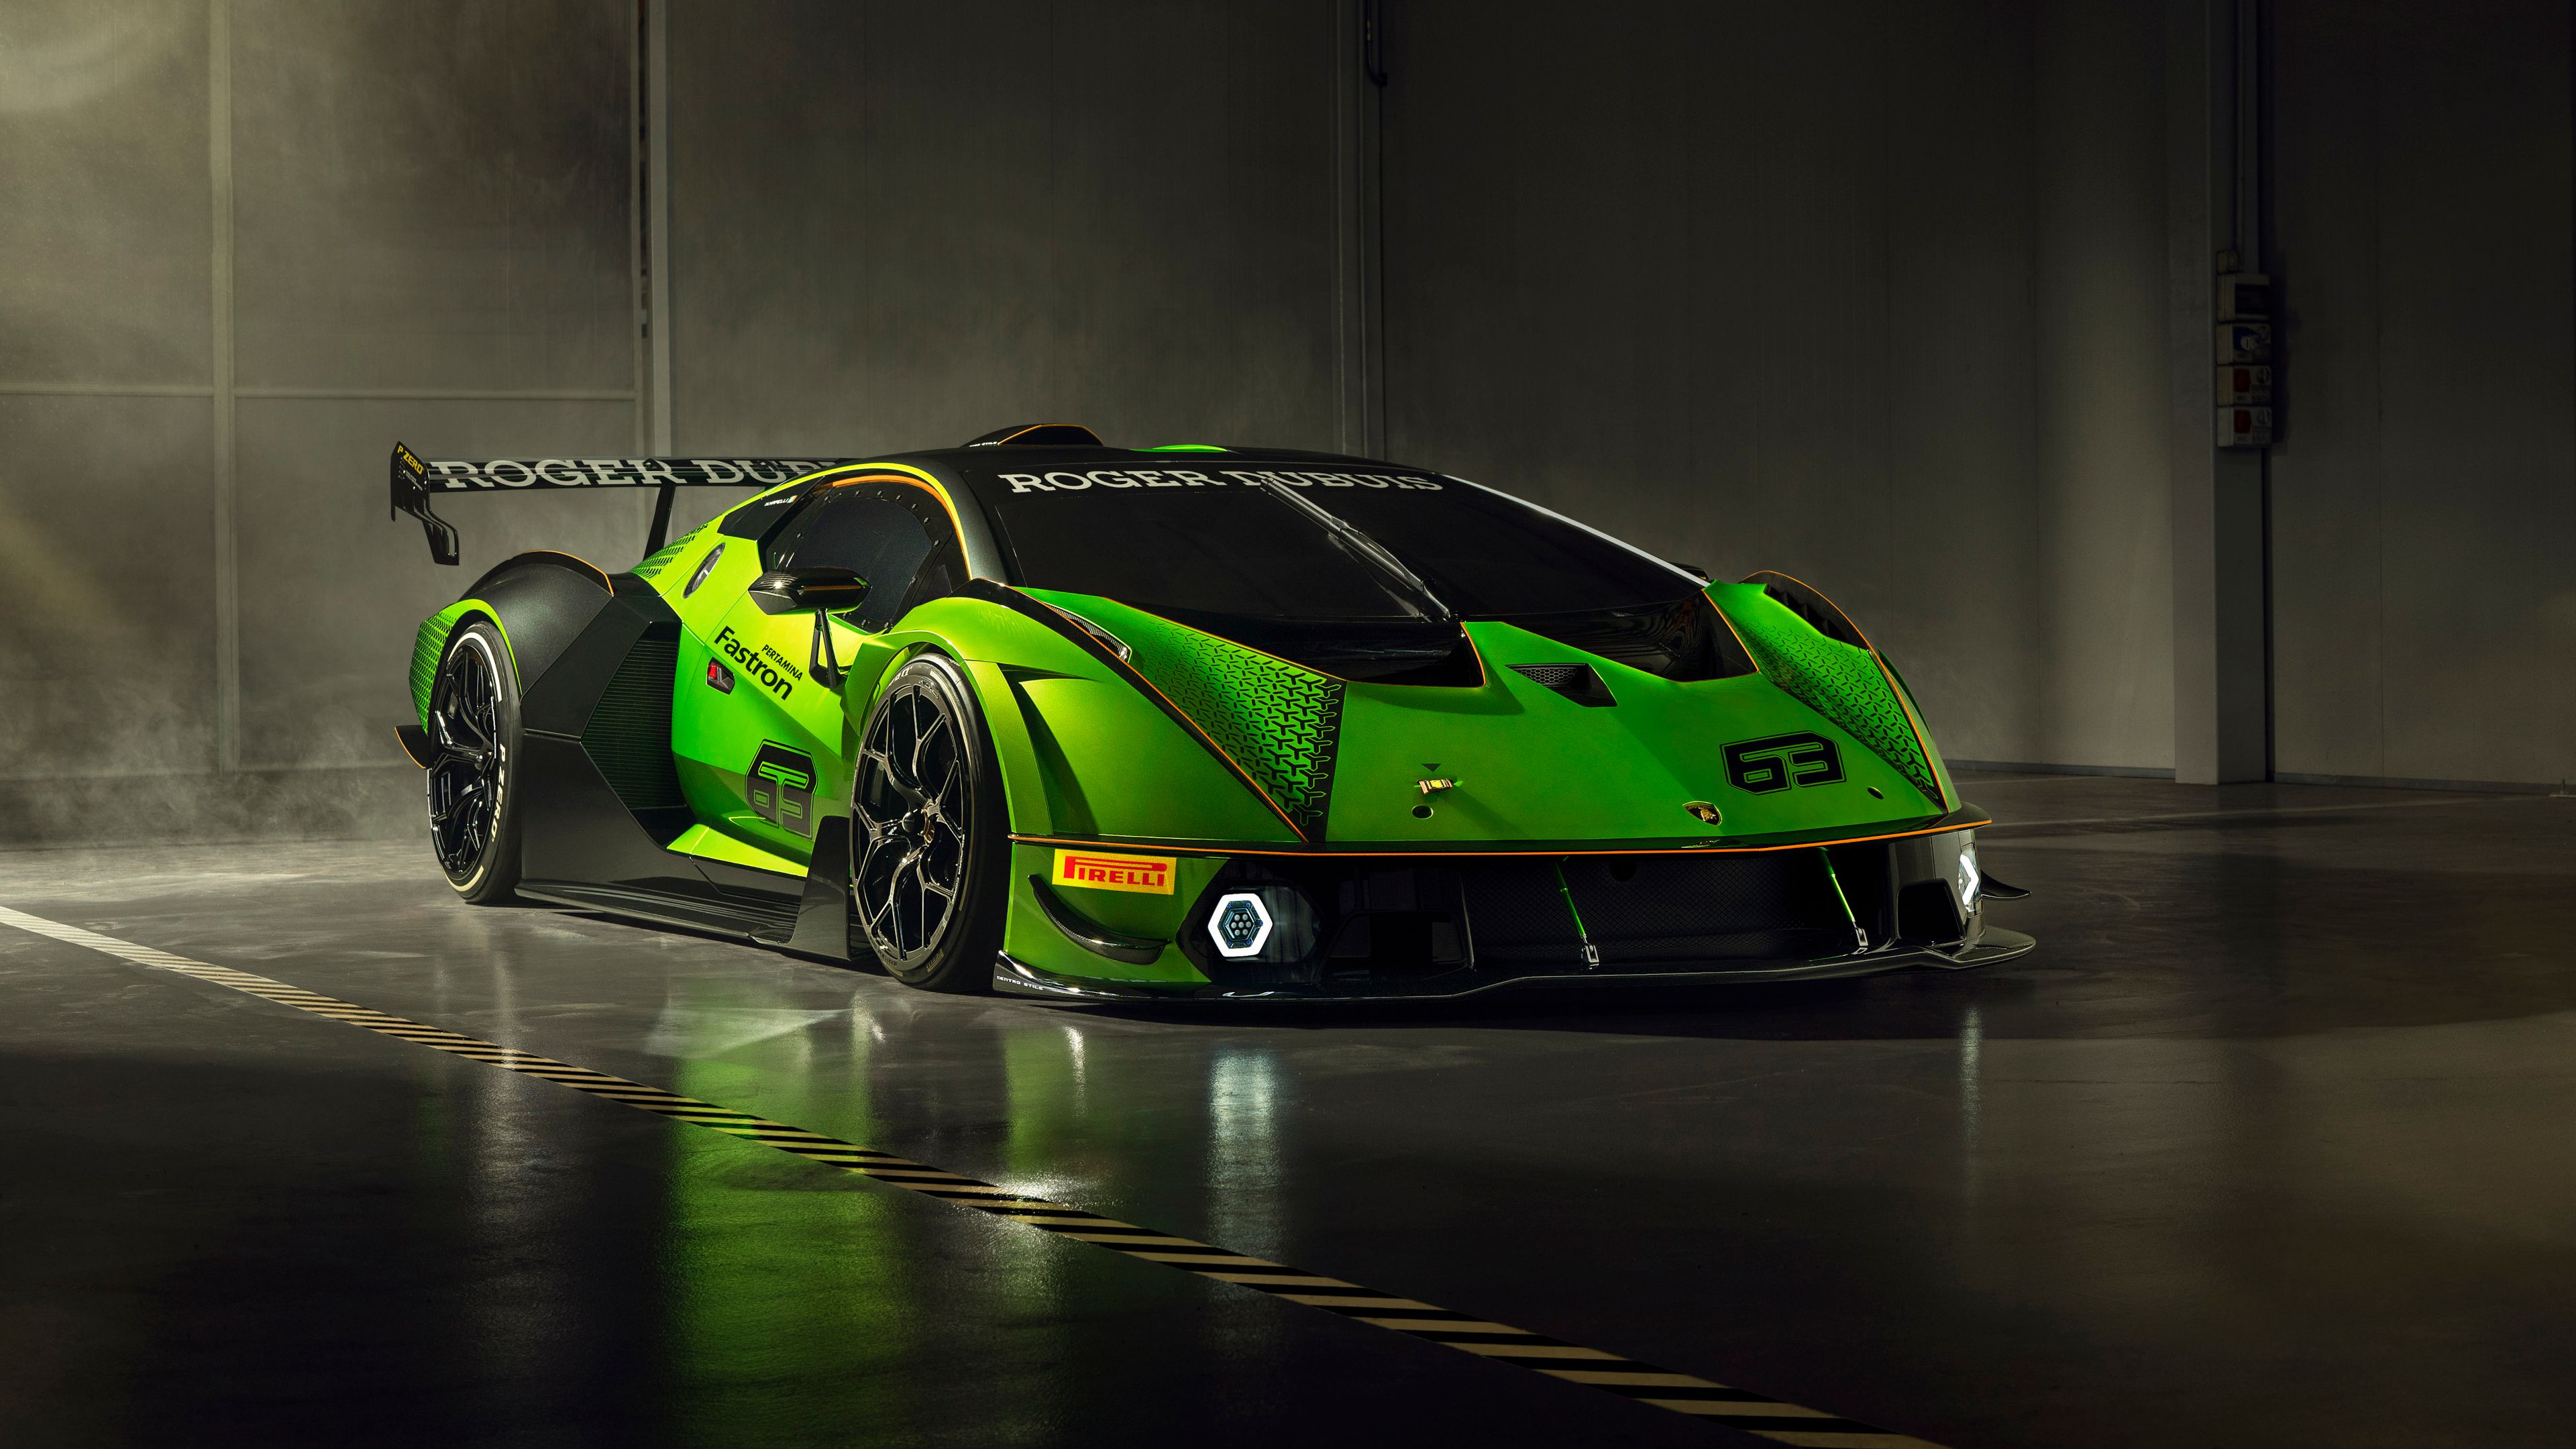 Lamborghini Essenza Car Supercars Vehicle Italian Supercars Race Cars Spotlights Low Light Green Car Wallpaper:3840x2160